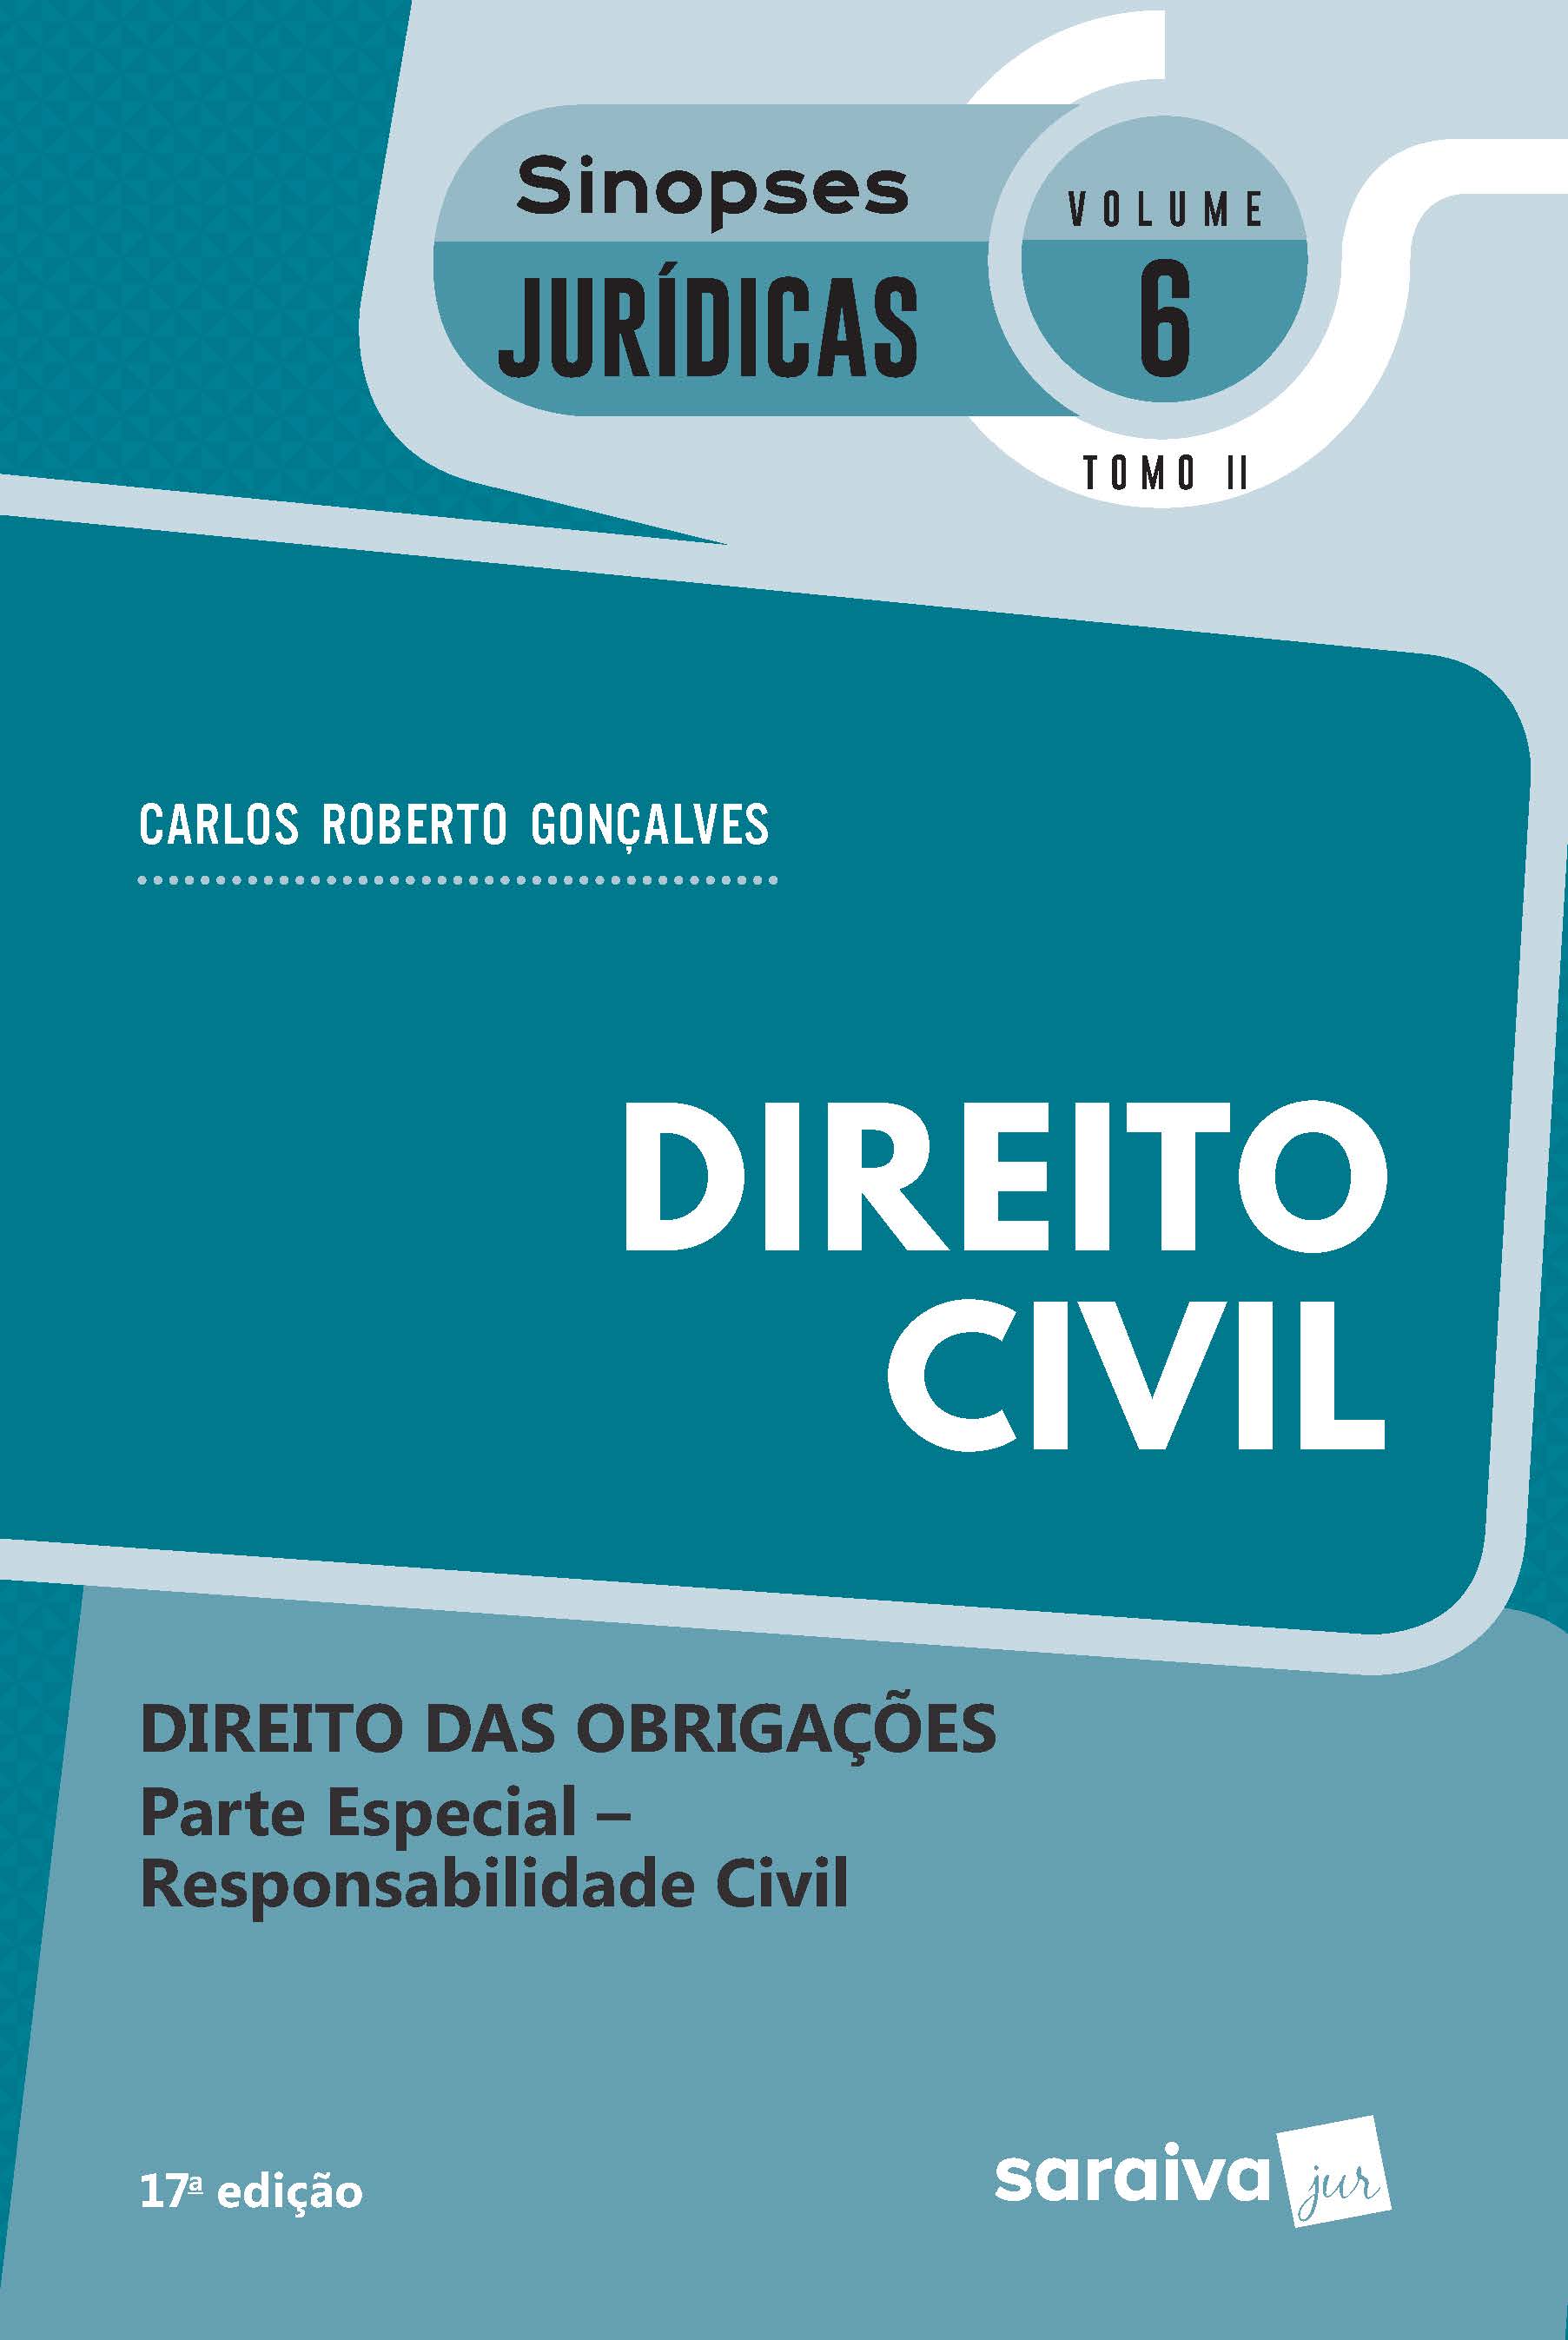 Sinopses - Direito Civil - Volume 6 - Tomo Ii - 17ª Edição 2020